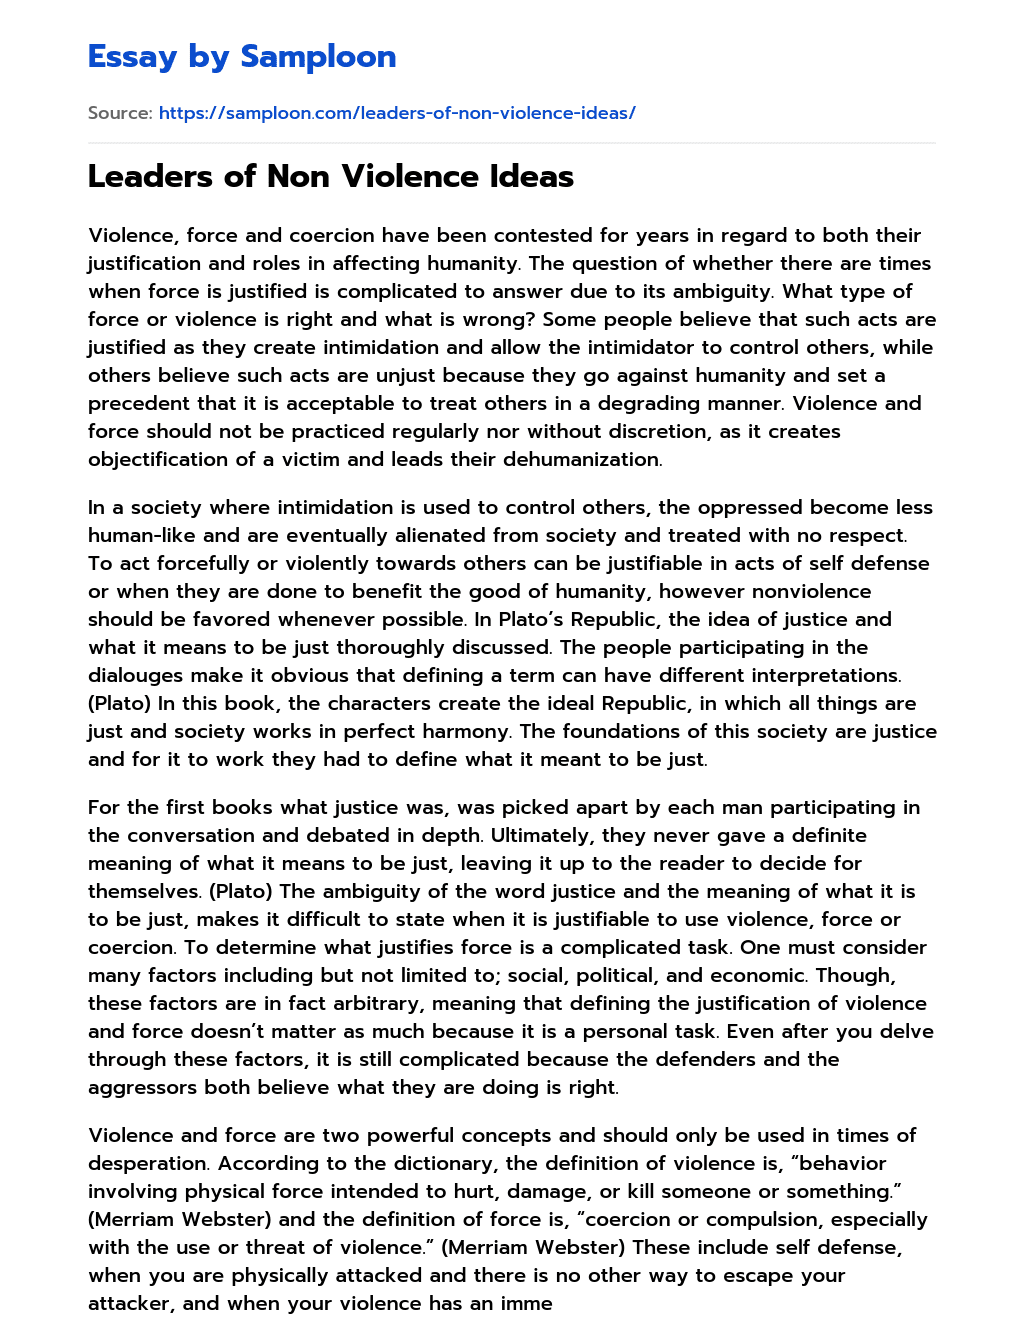 Leaders of Non Violence Ideas essay